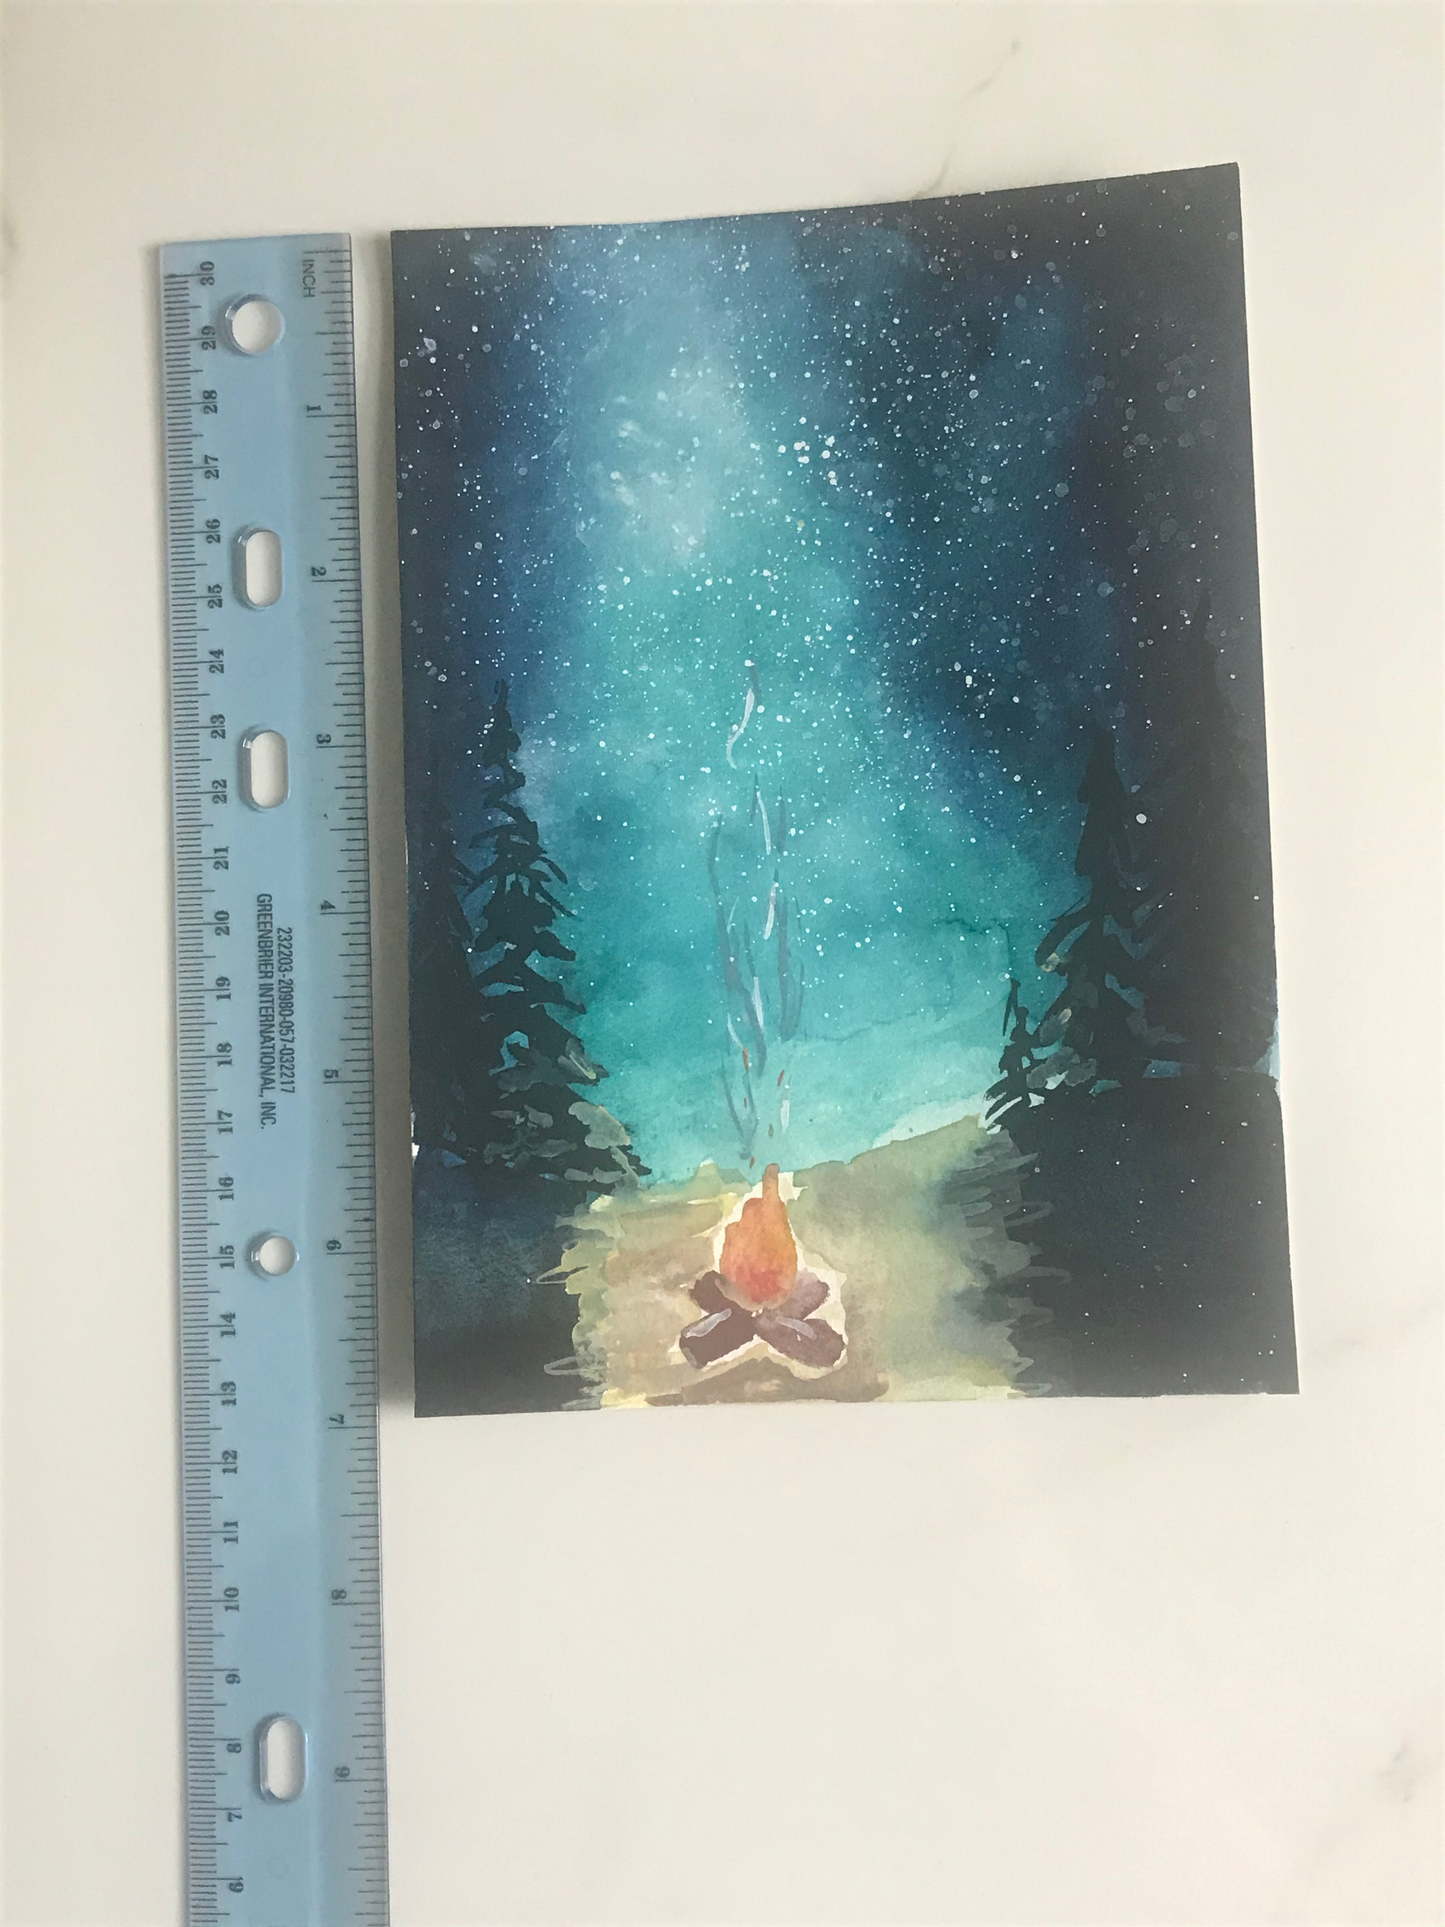 Campfire Under Night Sky - Original Watercolor Painting